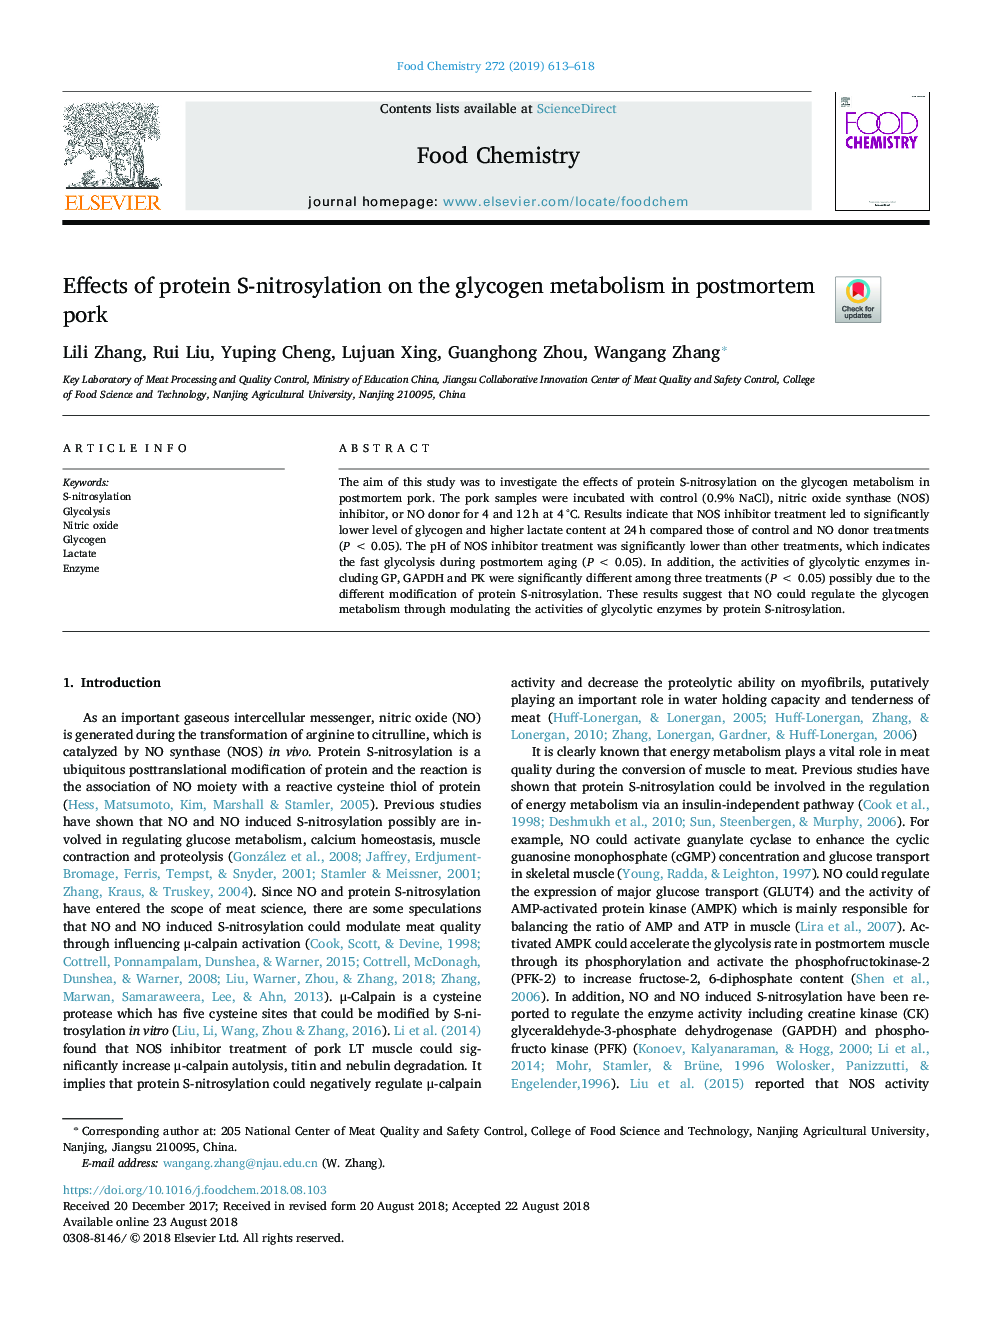 Effects of protein S-nitrosylation on the glycogen metabolism in postmortem pork